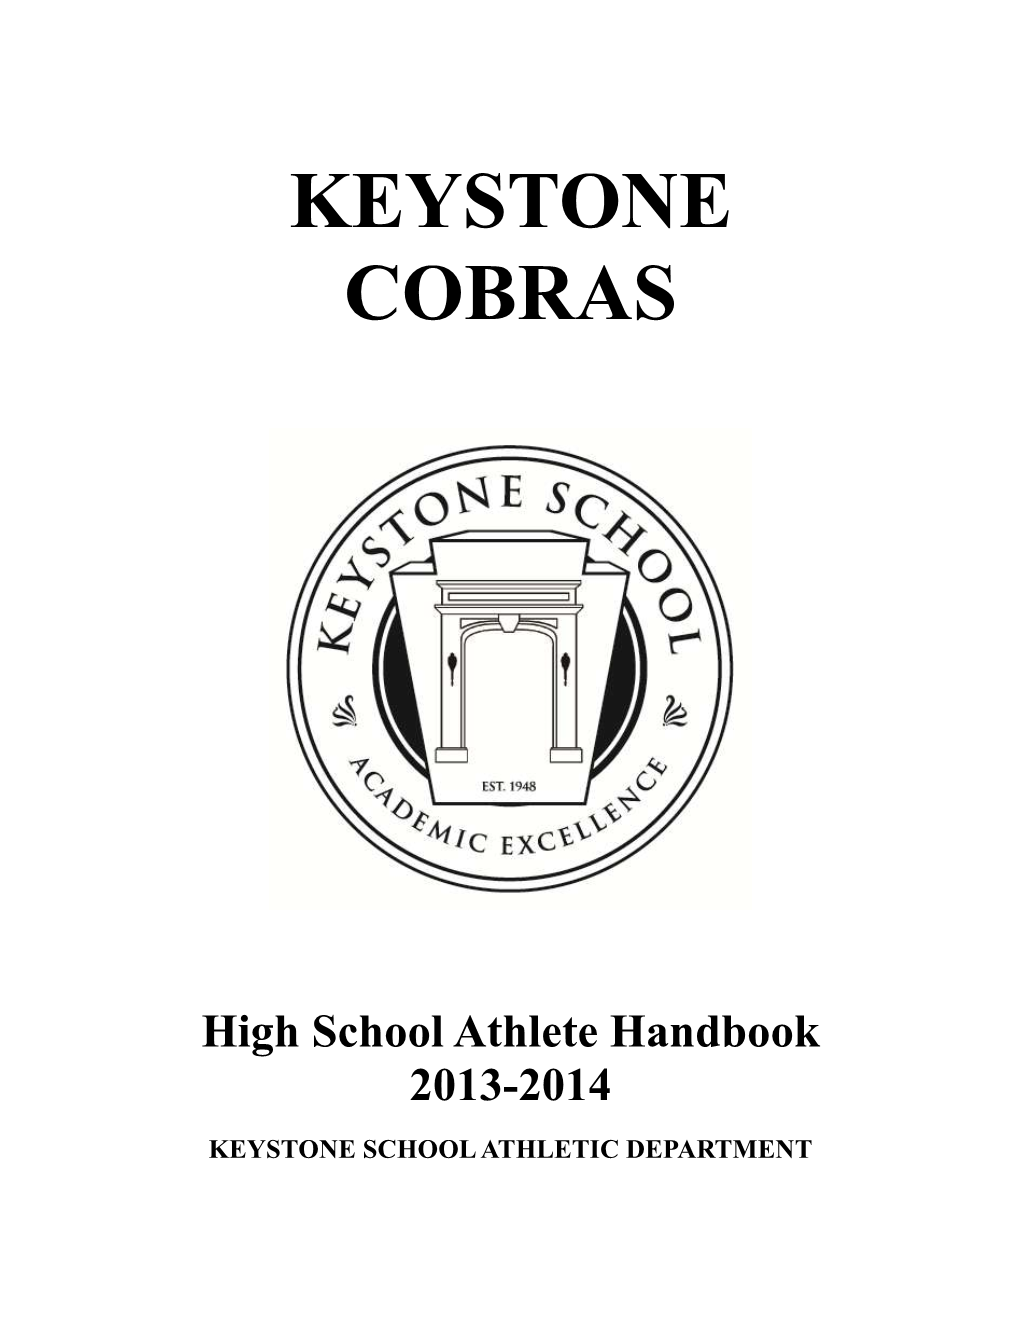 Keystone Cobras